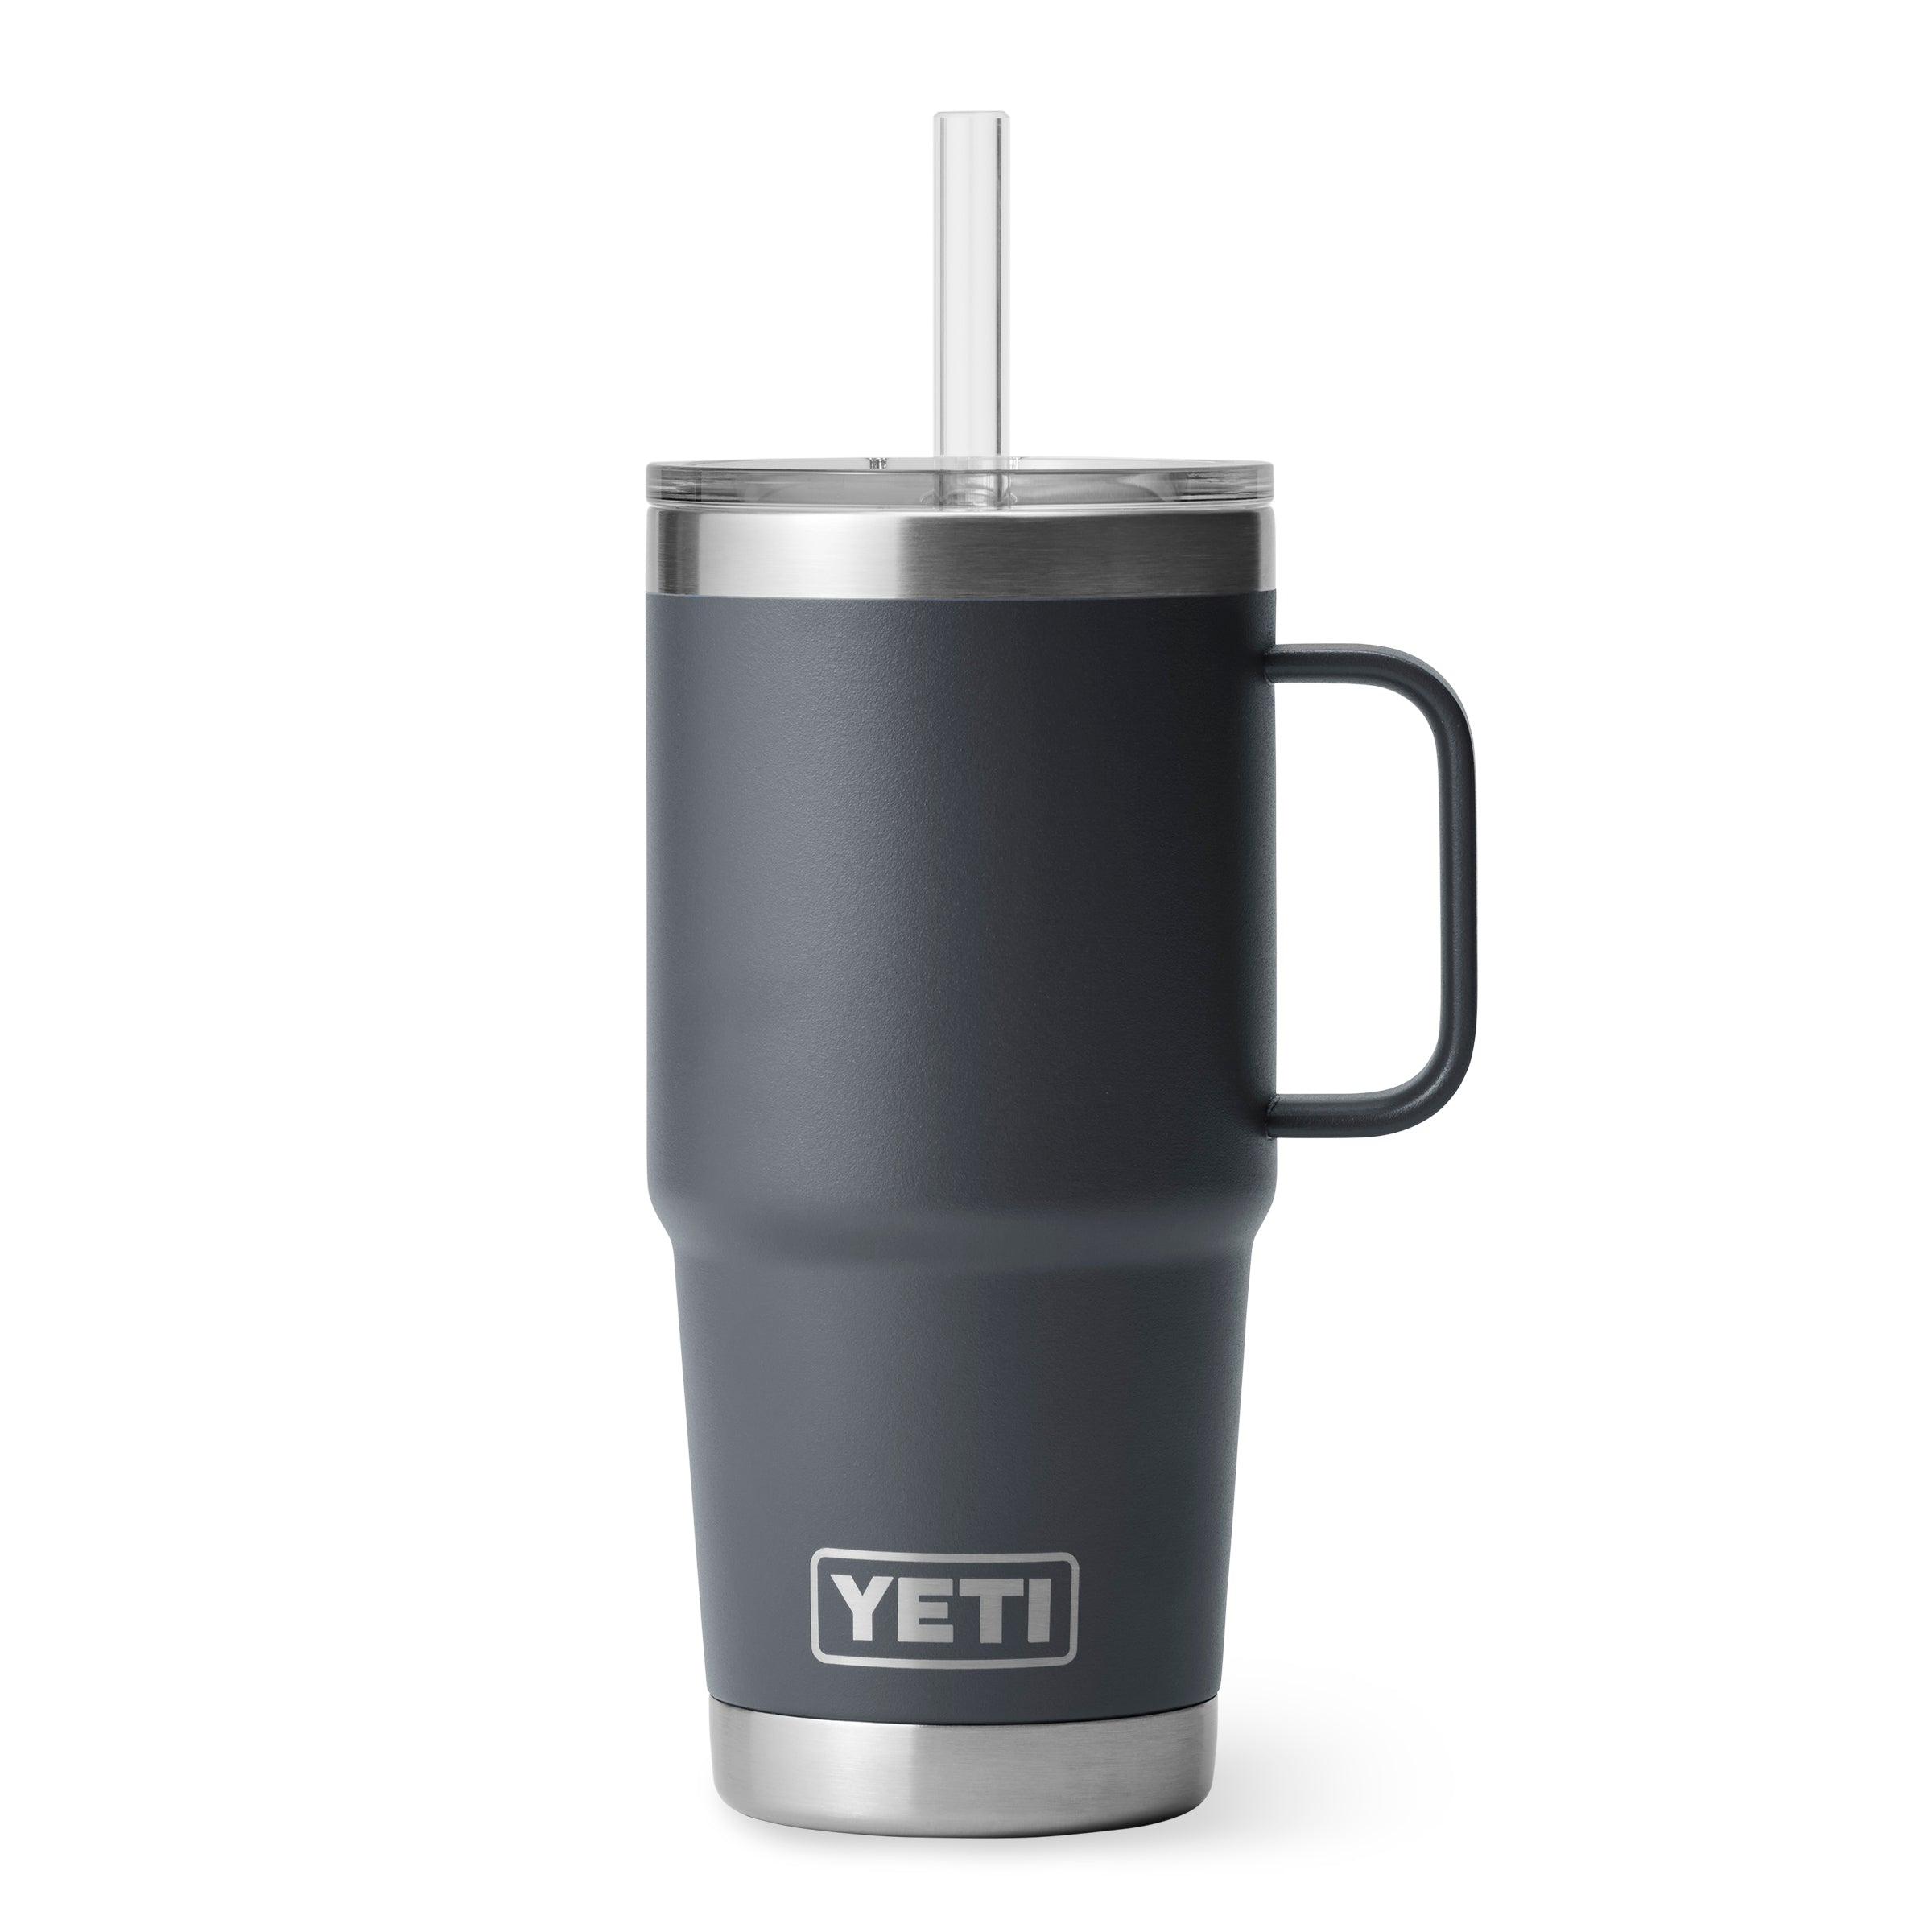 Did Someone Say YETI Sale? Take 25% Off Select YETI Drinkware Today